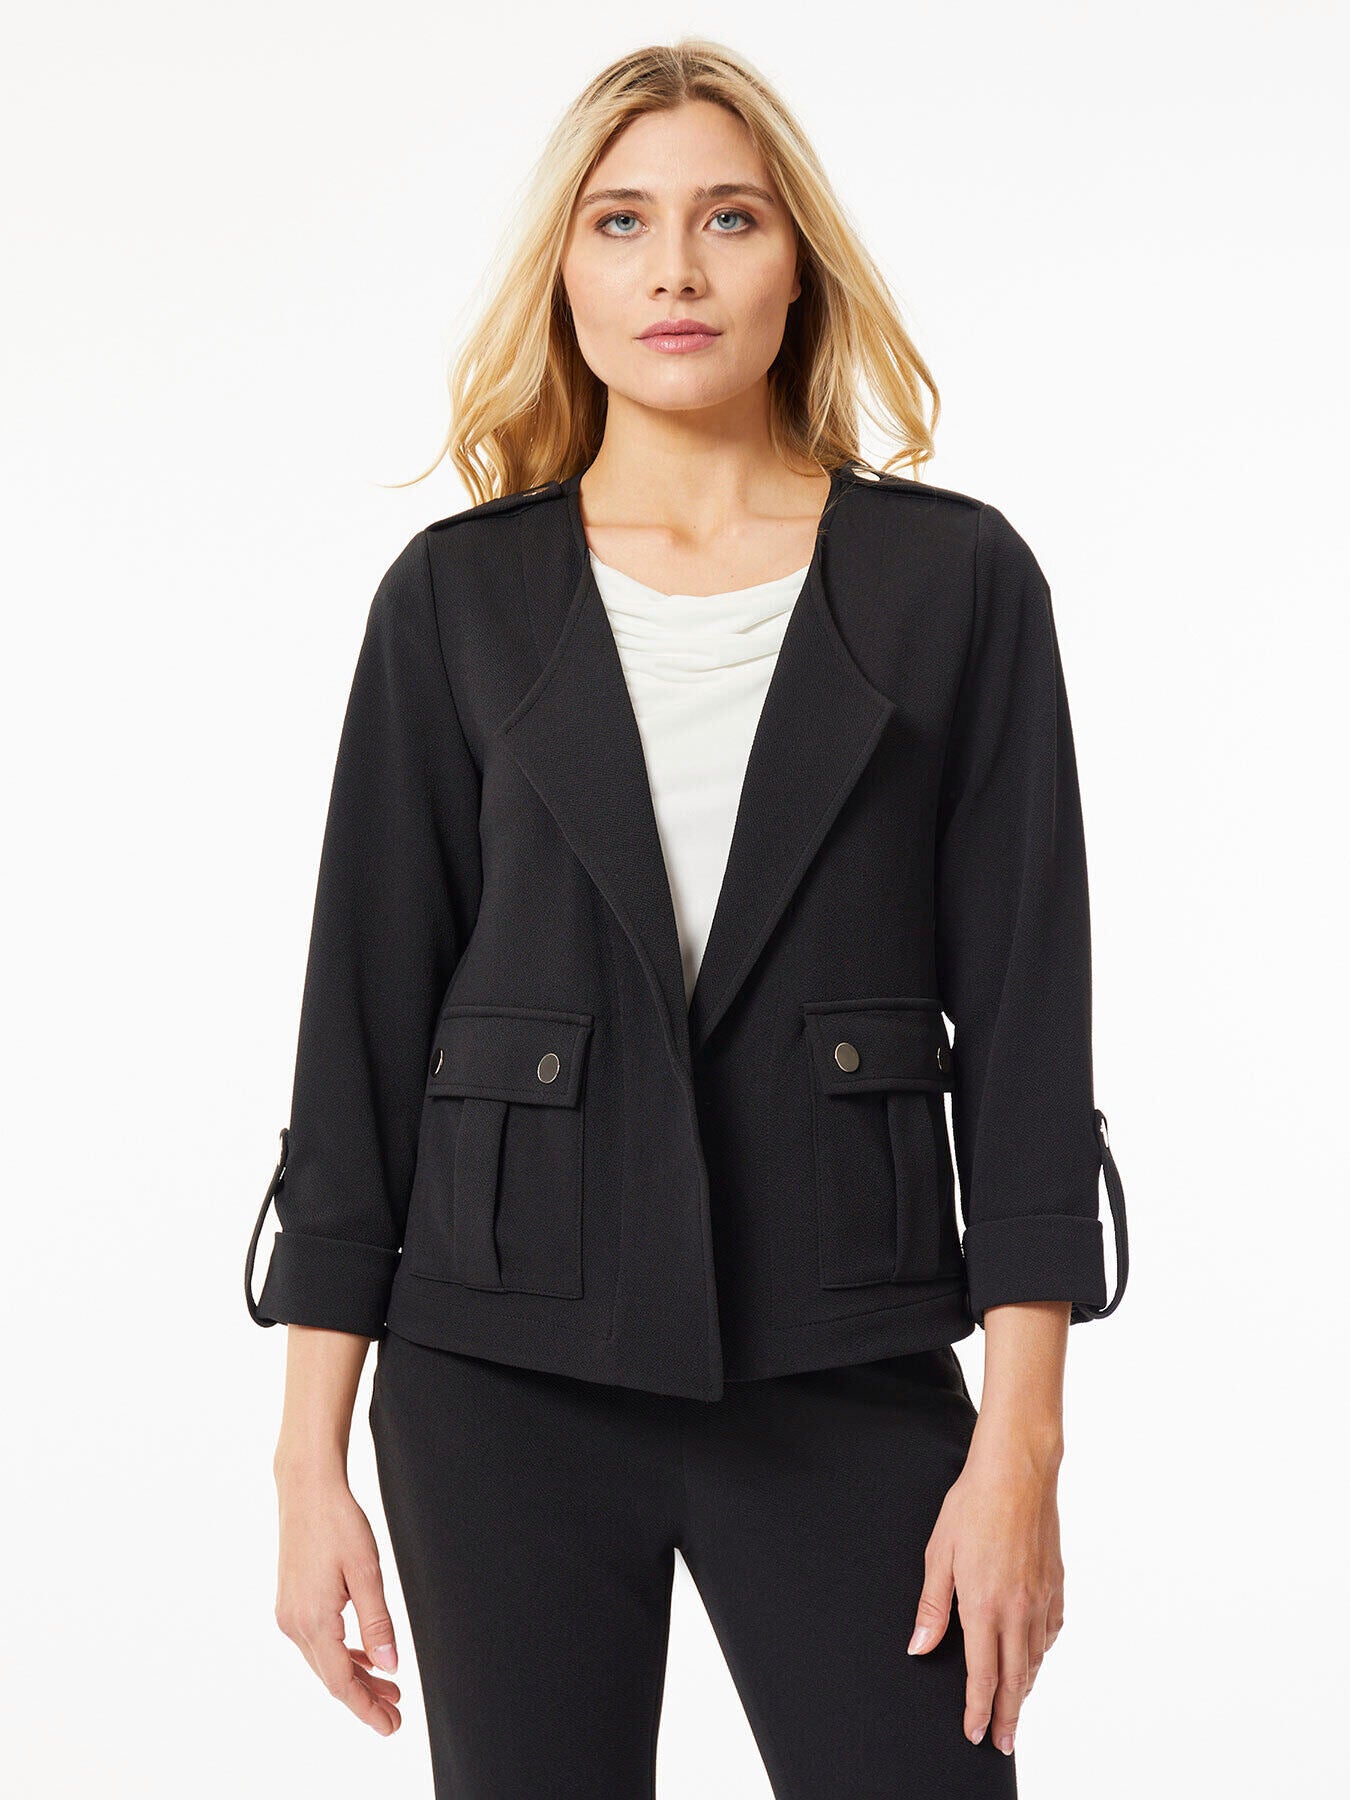 Black Knit Jacket - Women's Blazer with Pockets | Kasper